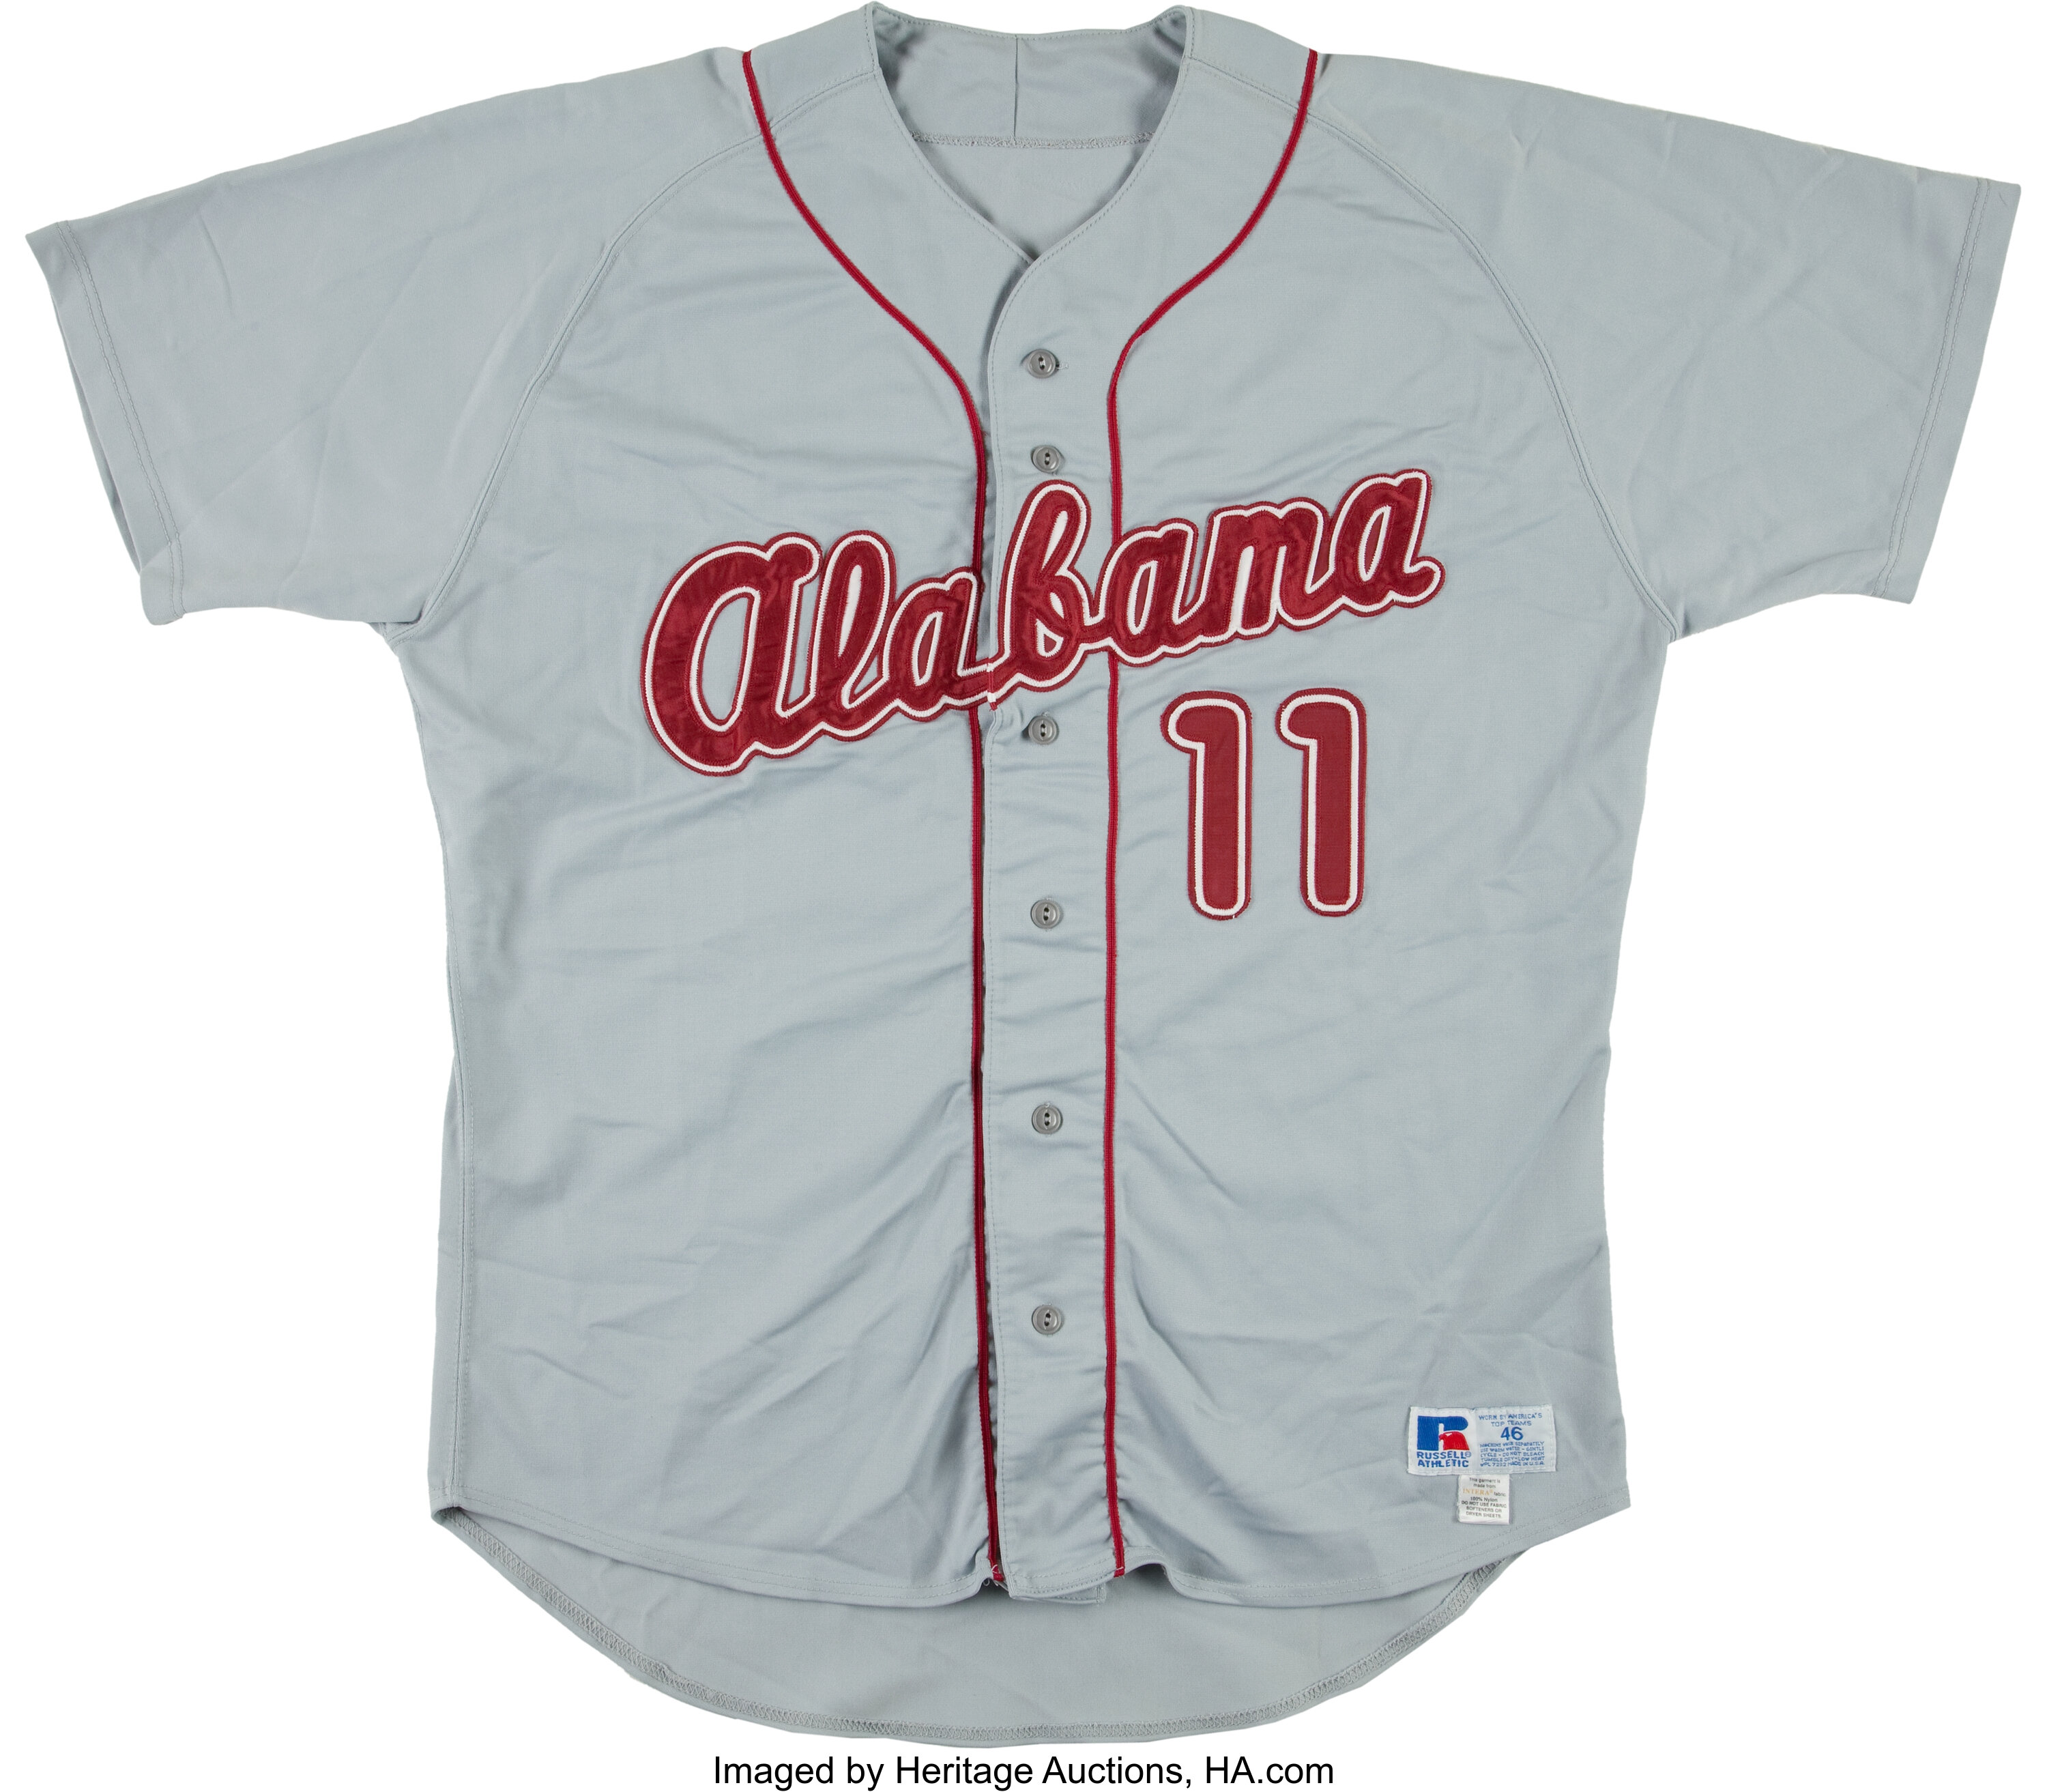 1980's-90's Alabama Crimson Tide Game Worn Baseball Jerseys Lot of